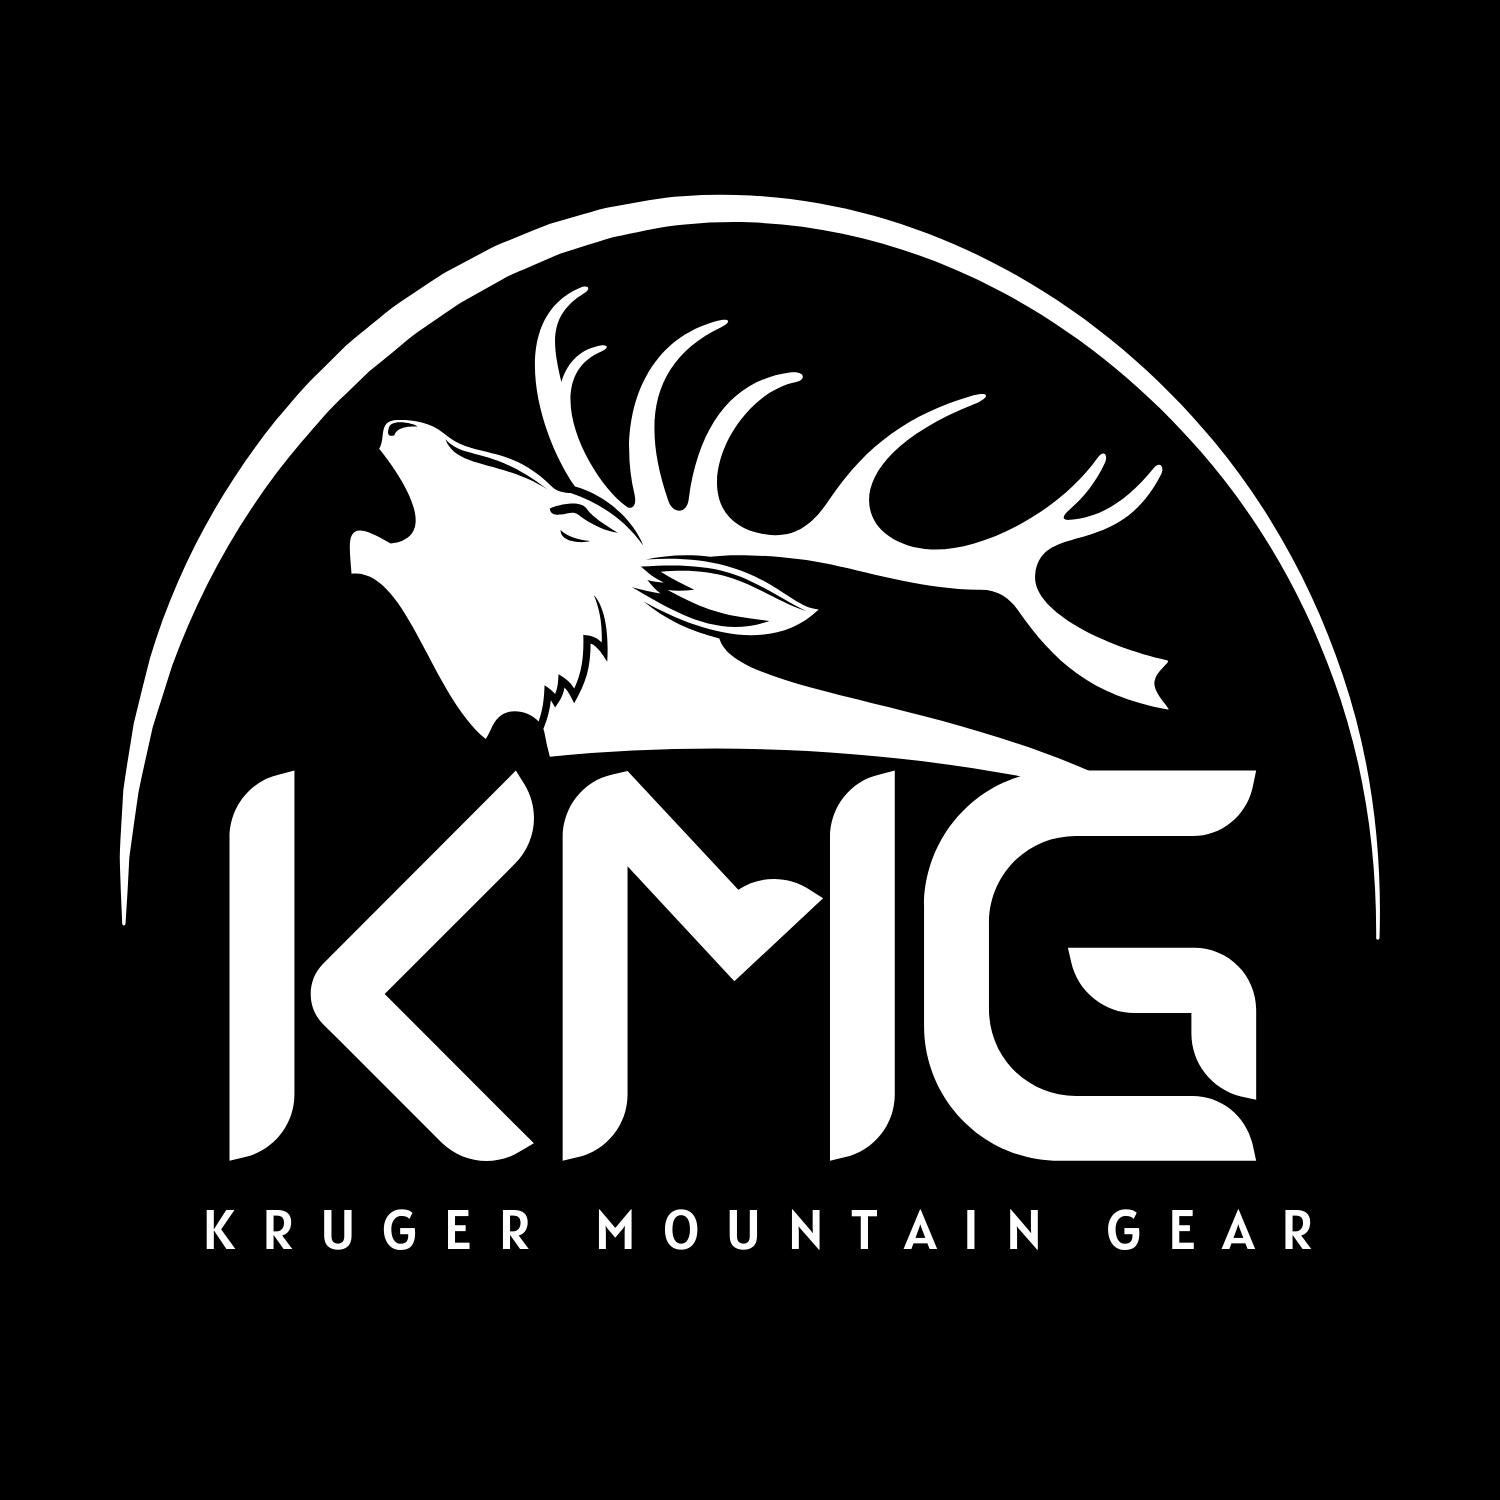 Kruger Mountain Gear